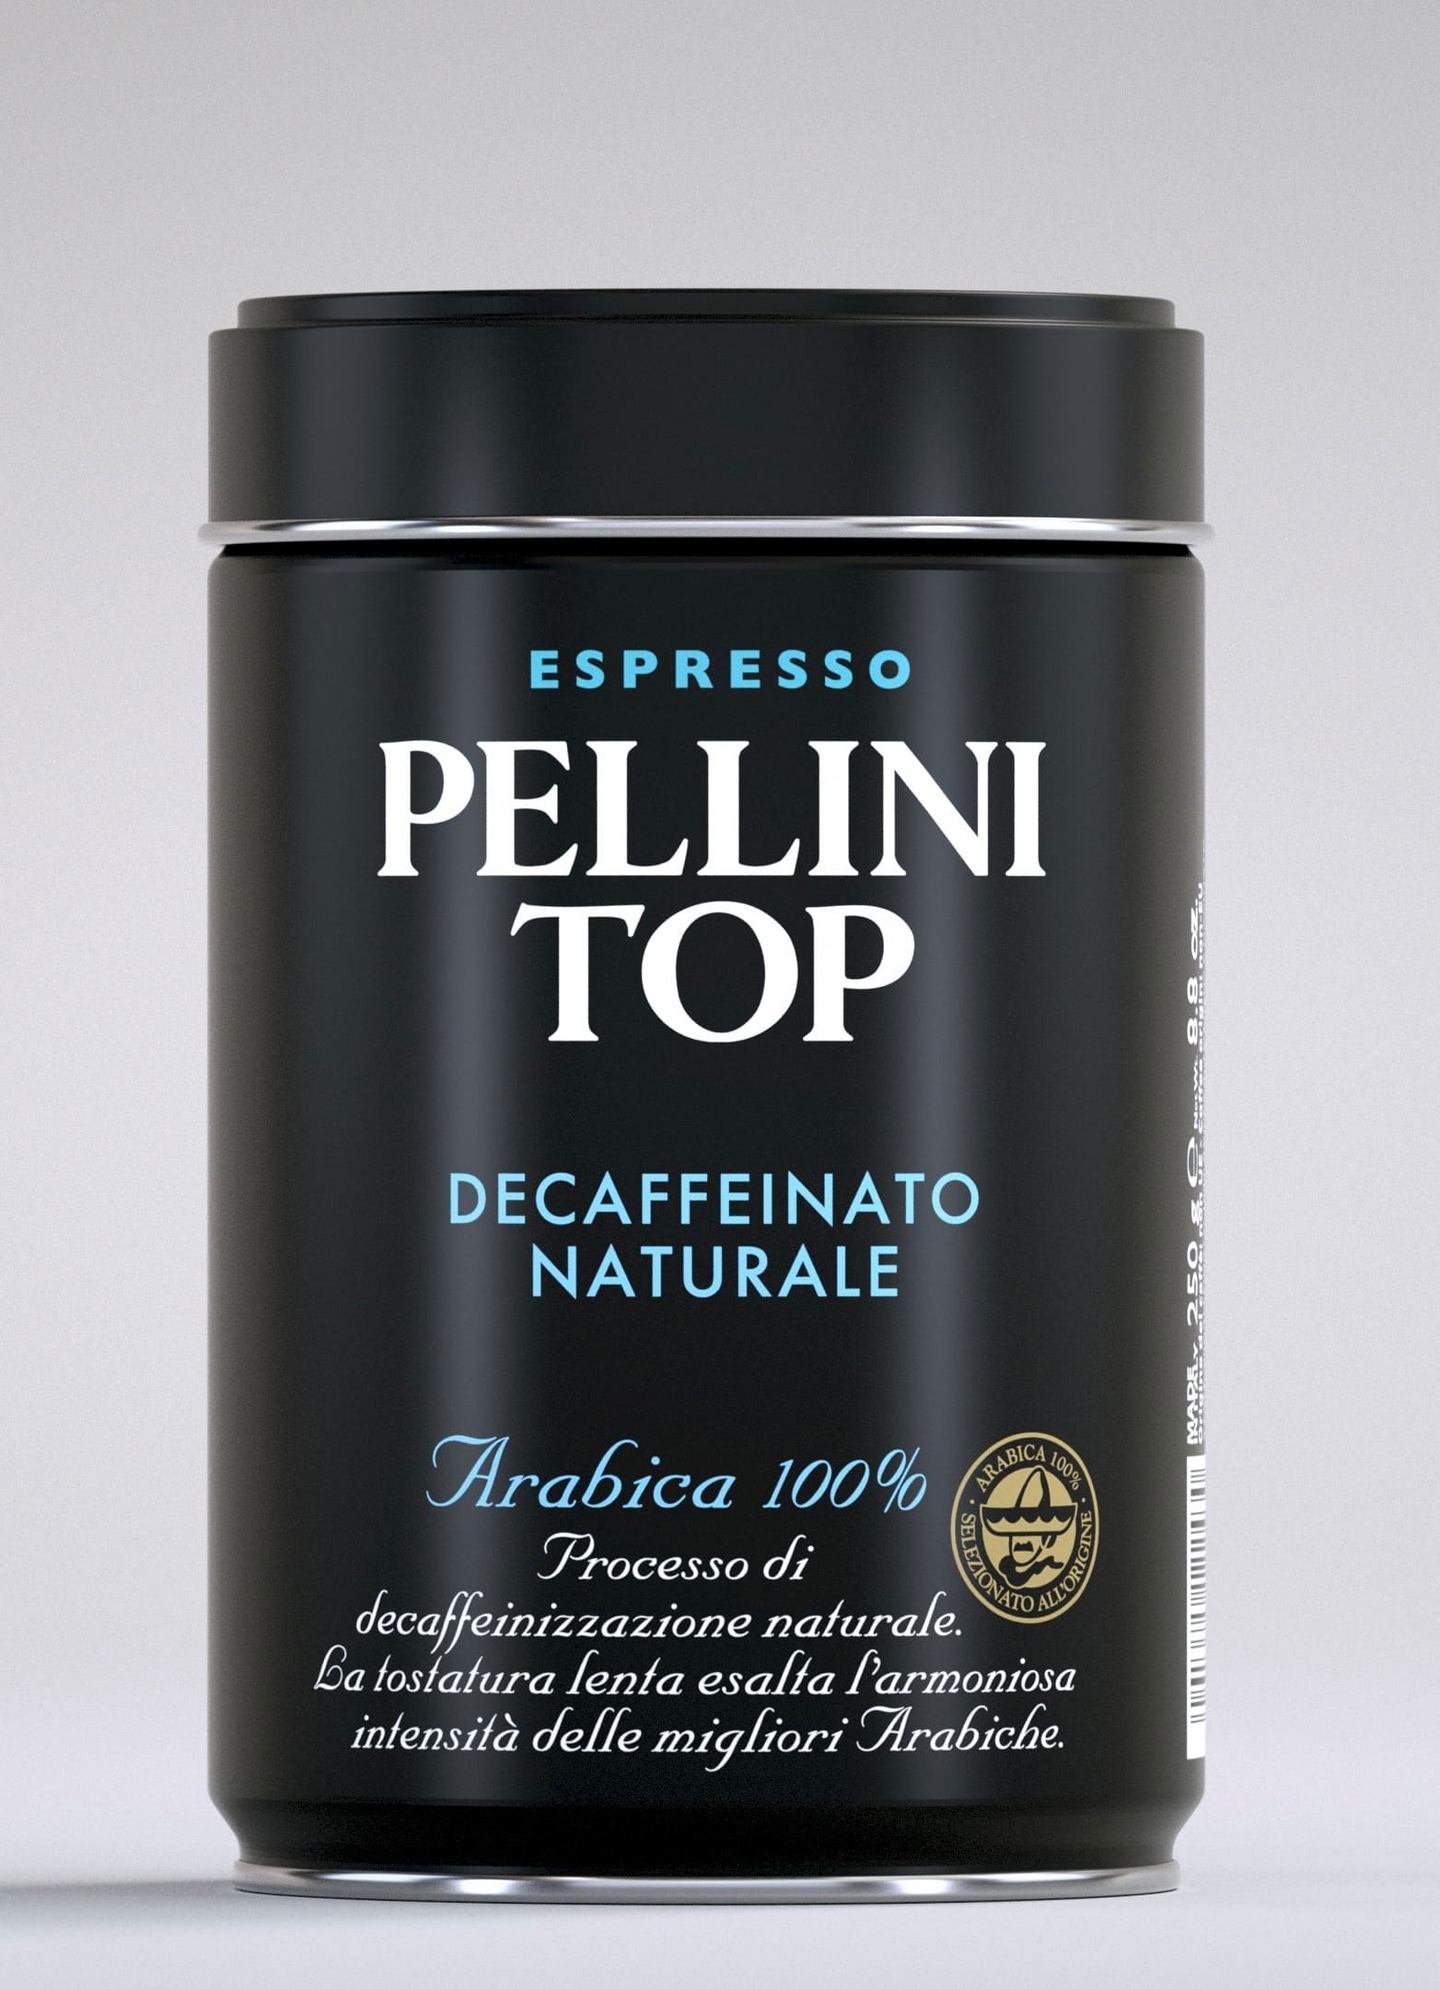 Pellini TOP 250g jauhettu espressokahvi 100% Arabica kofeiiniton